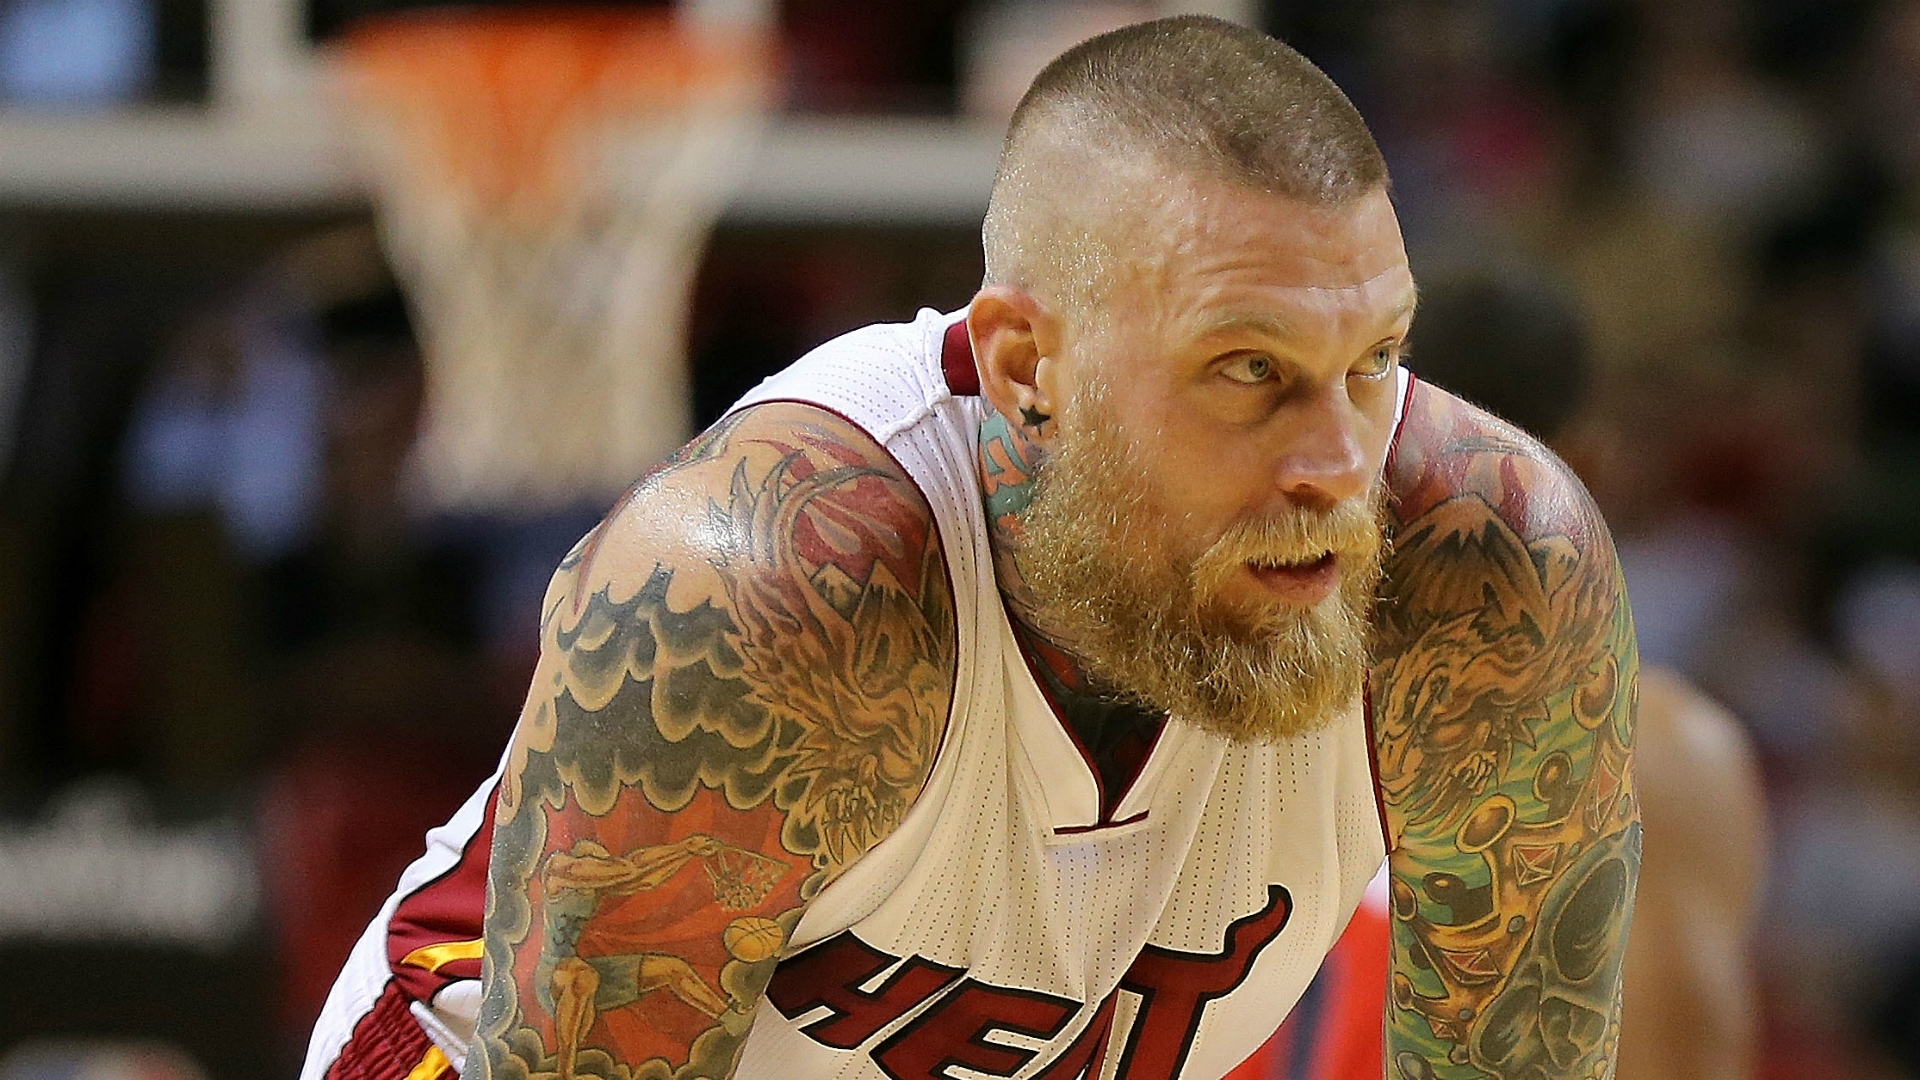 'Birdman' as an old man: Heat's Chris Andersen grows into veteran leader